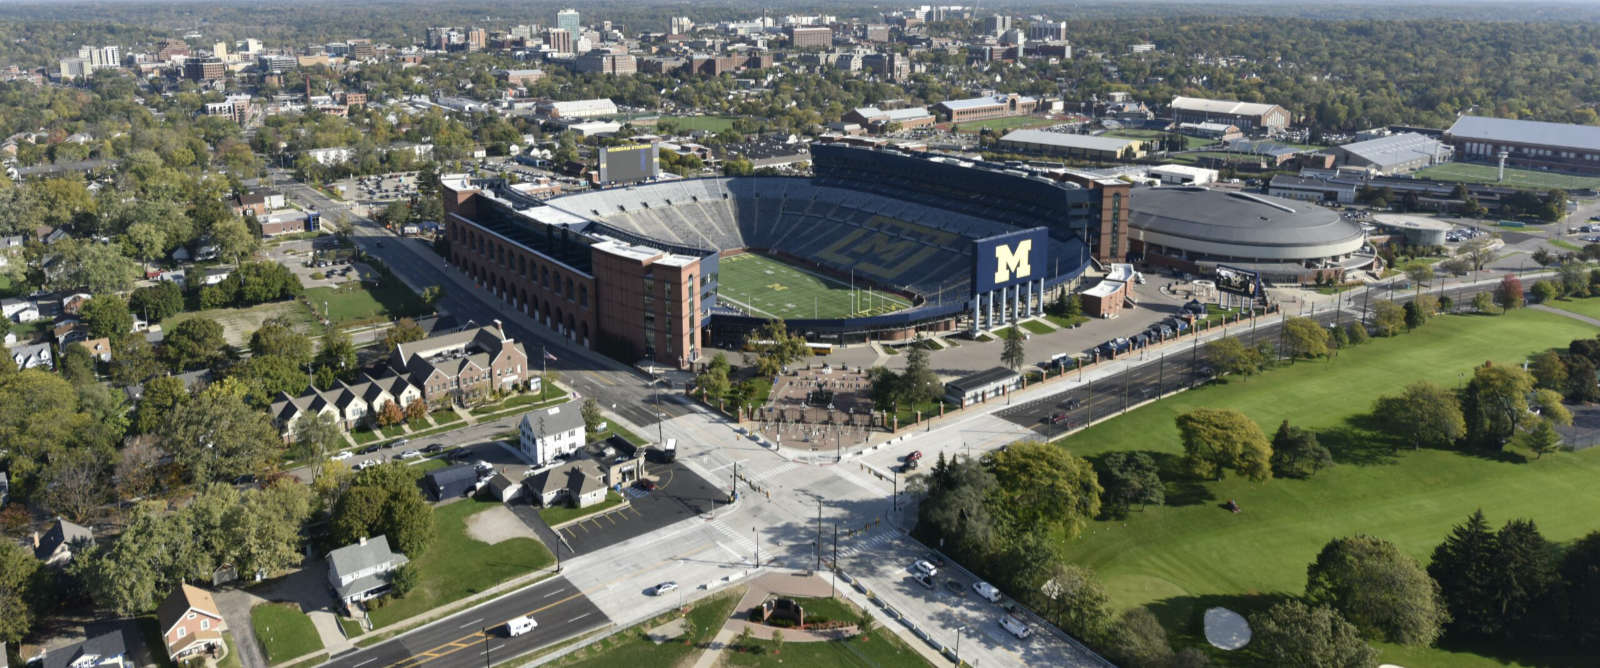 Aerial view of University of Michigan "Big House" football stadium